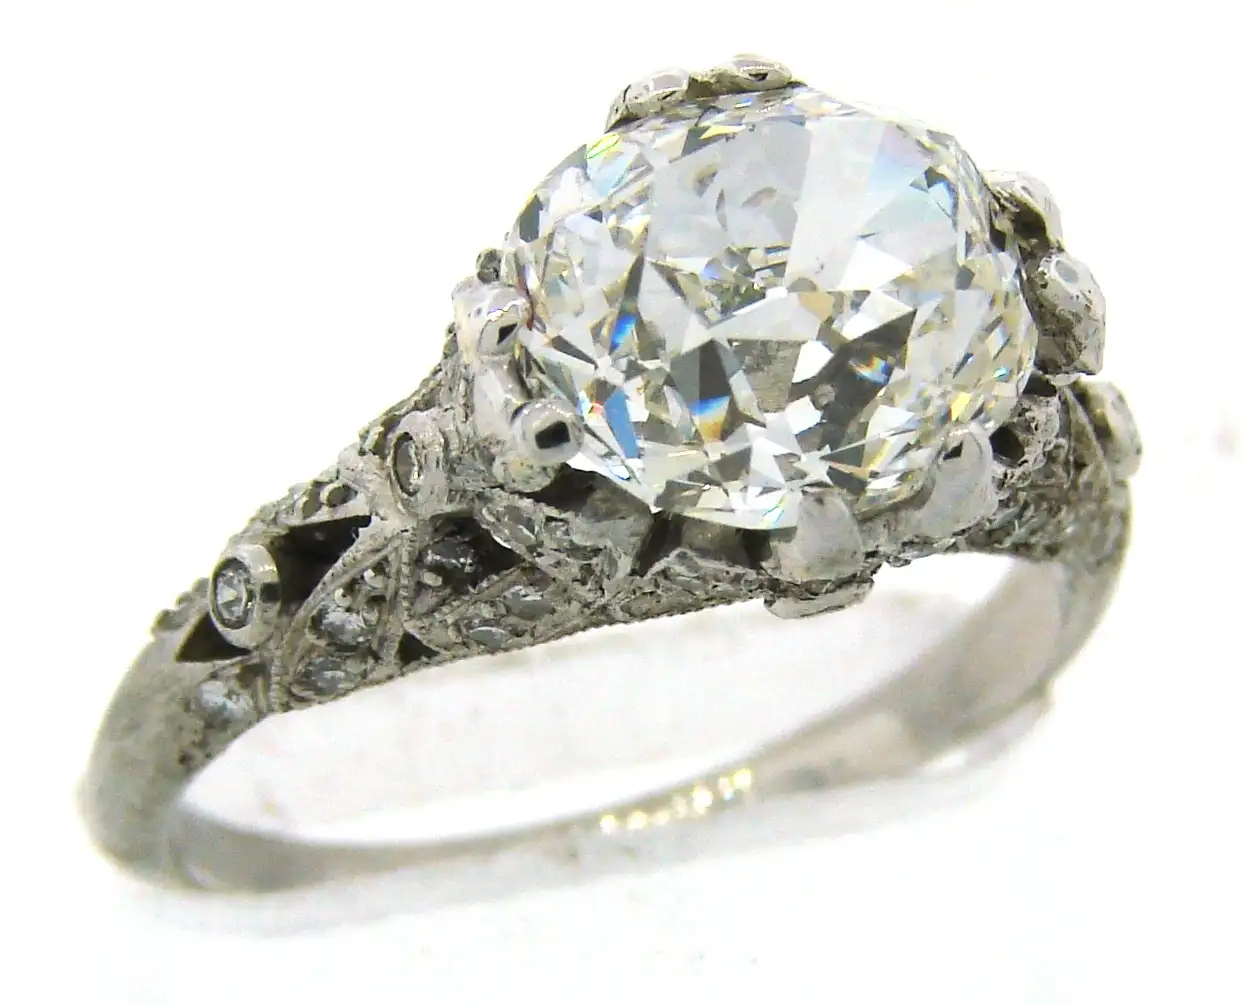 Cushion Cut Diamond Platinum Ring Art Deco circa 1920s 3.02-carat GIA G SI1